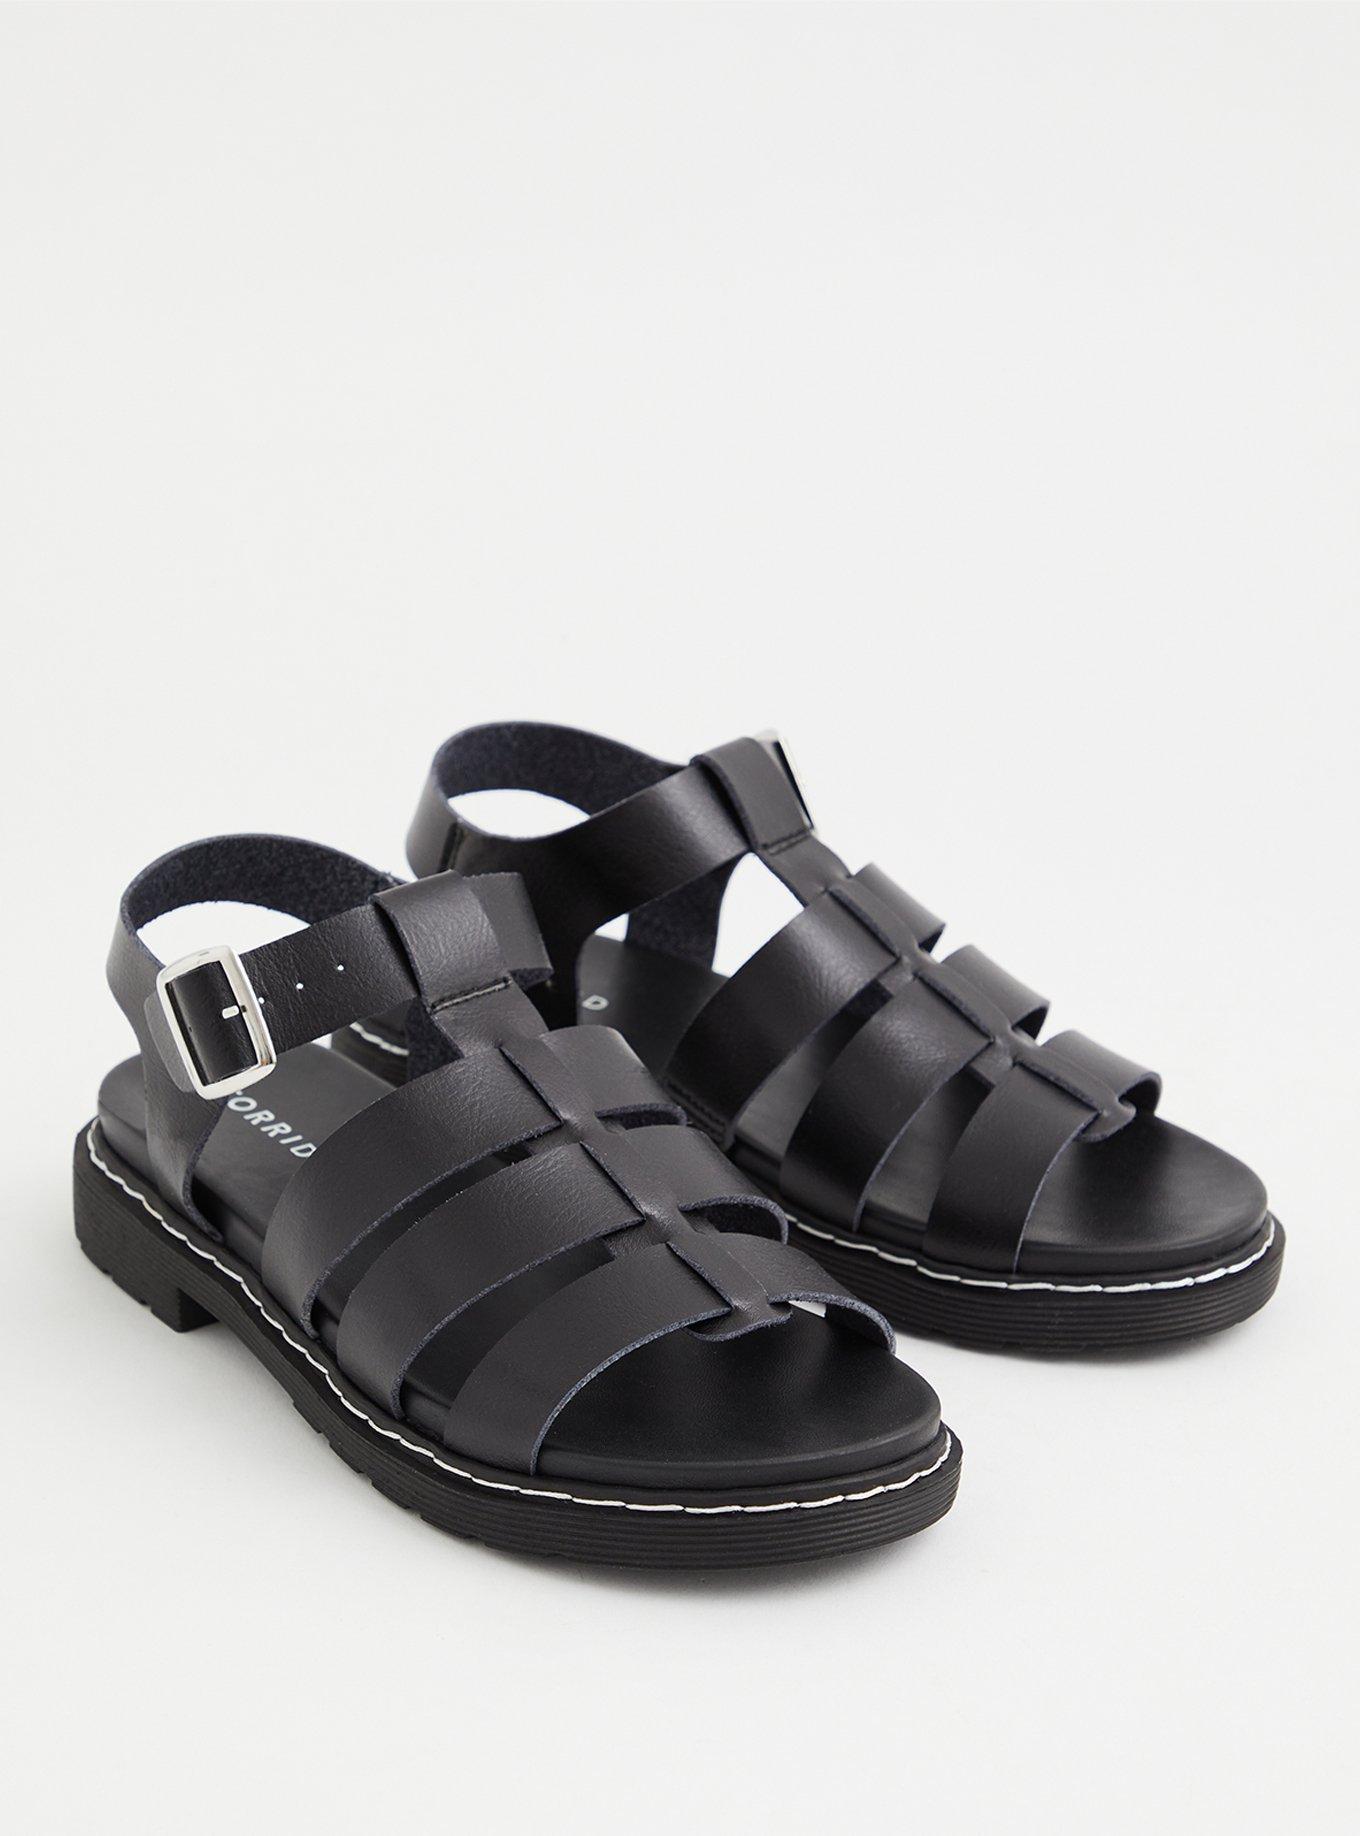 Torrid 10 WW Black Faux Leather Sandals Womens extra wide width